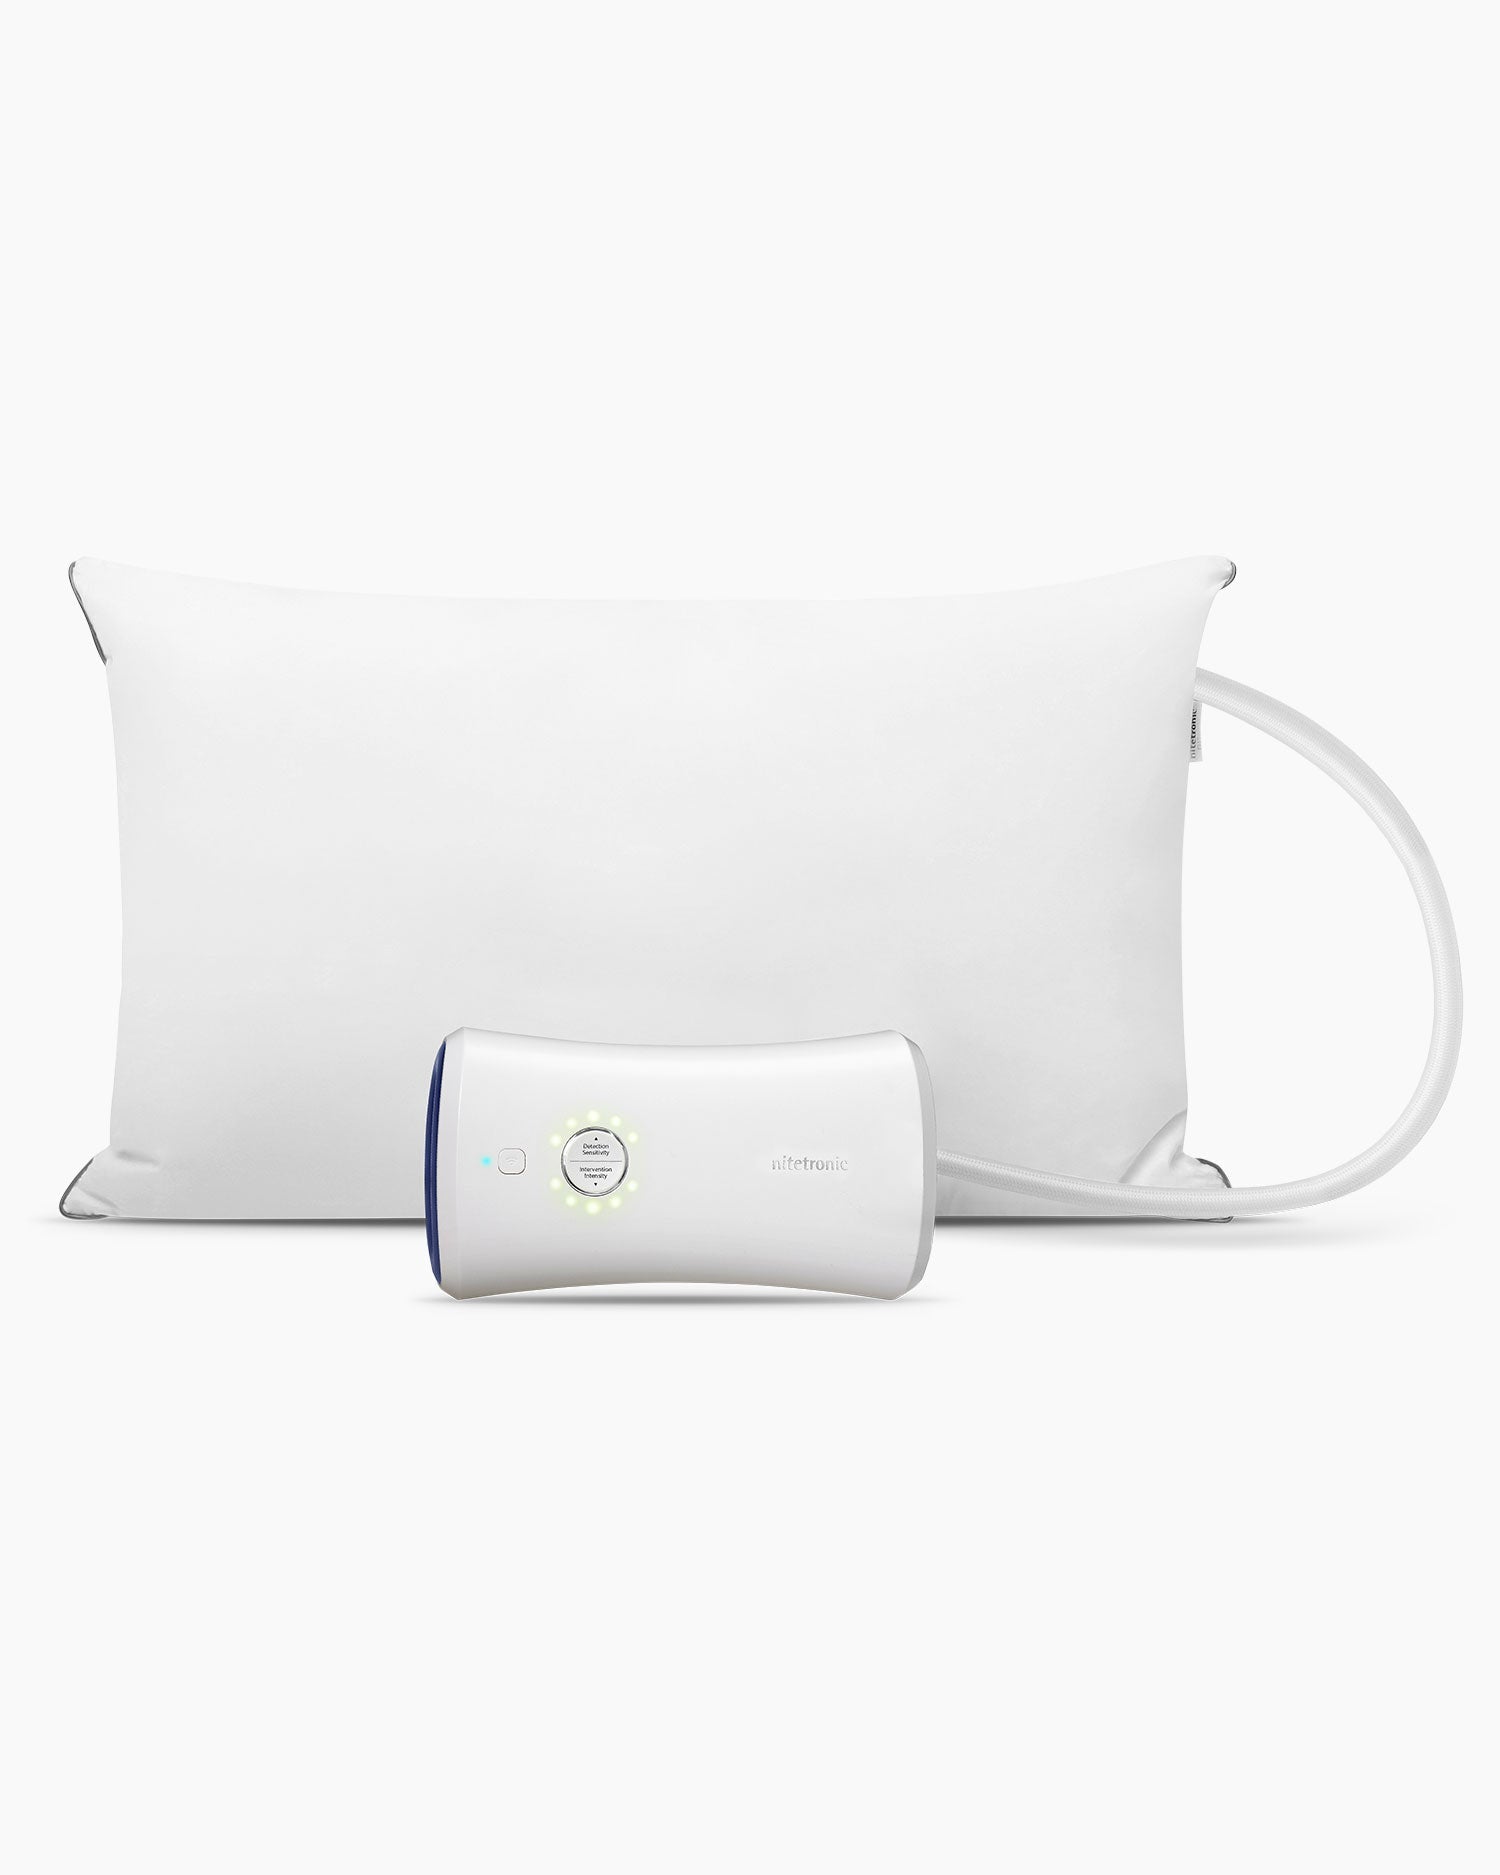 Nitetronic Z6 Anti Snore Pillow Slide Image 1